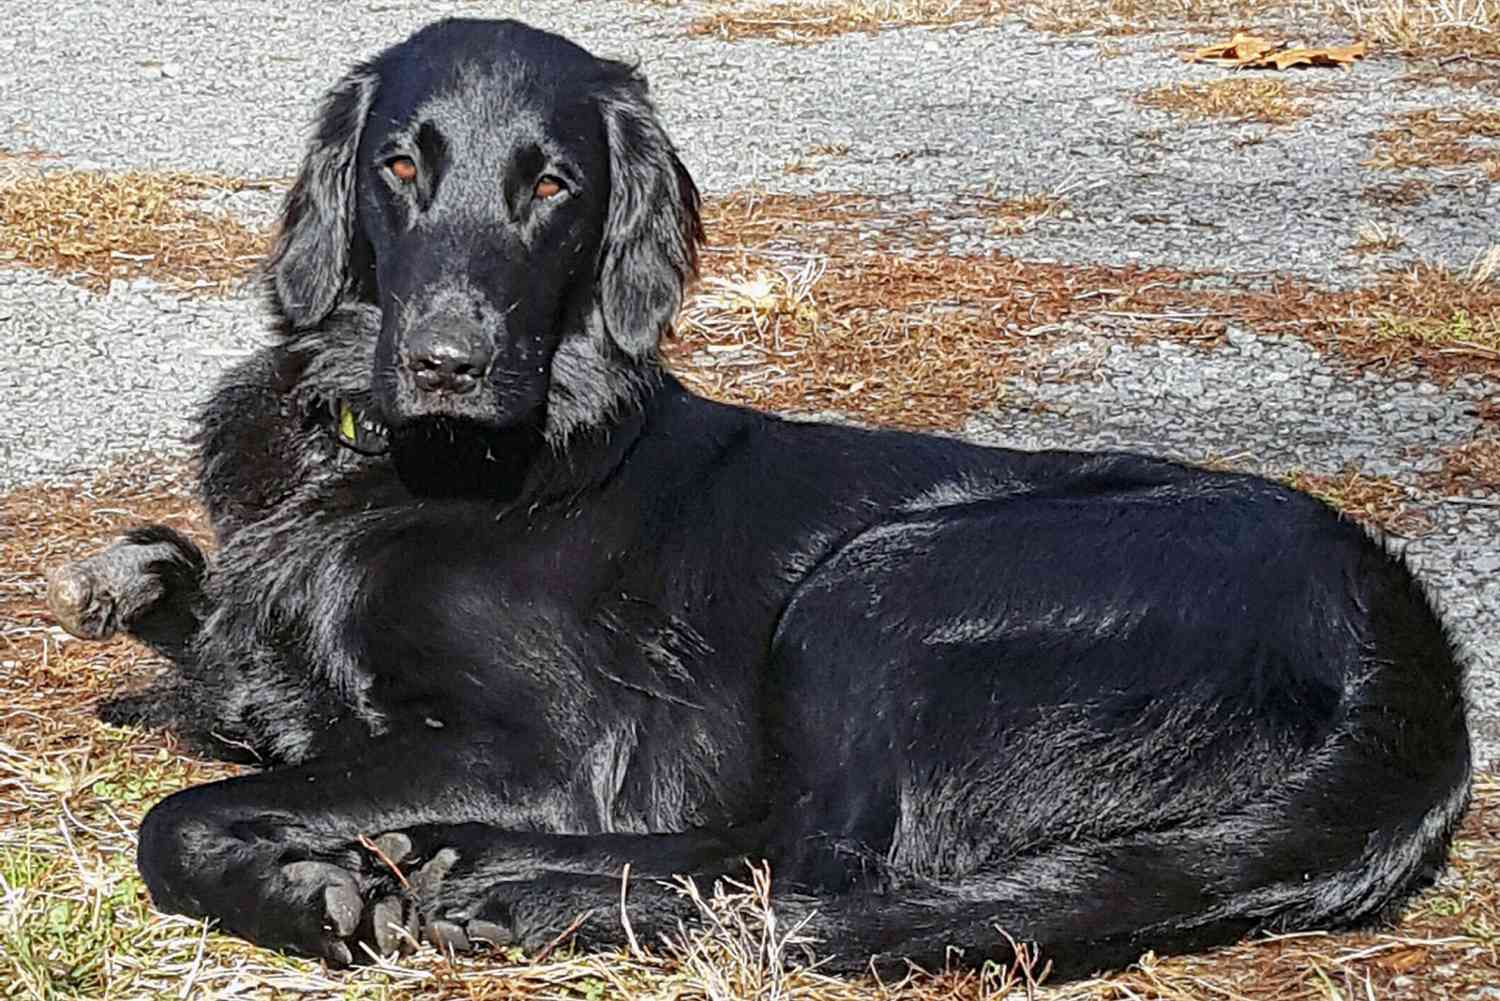 Large black dog relaxes on gravel